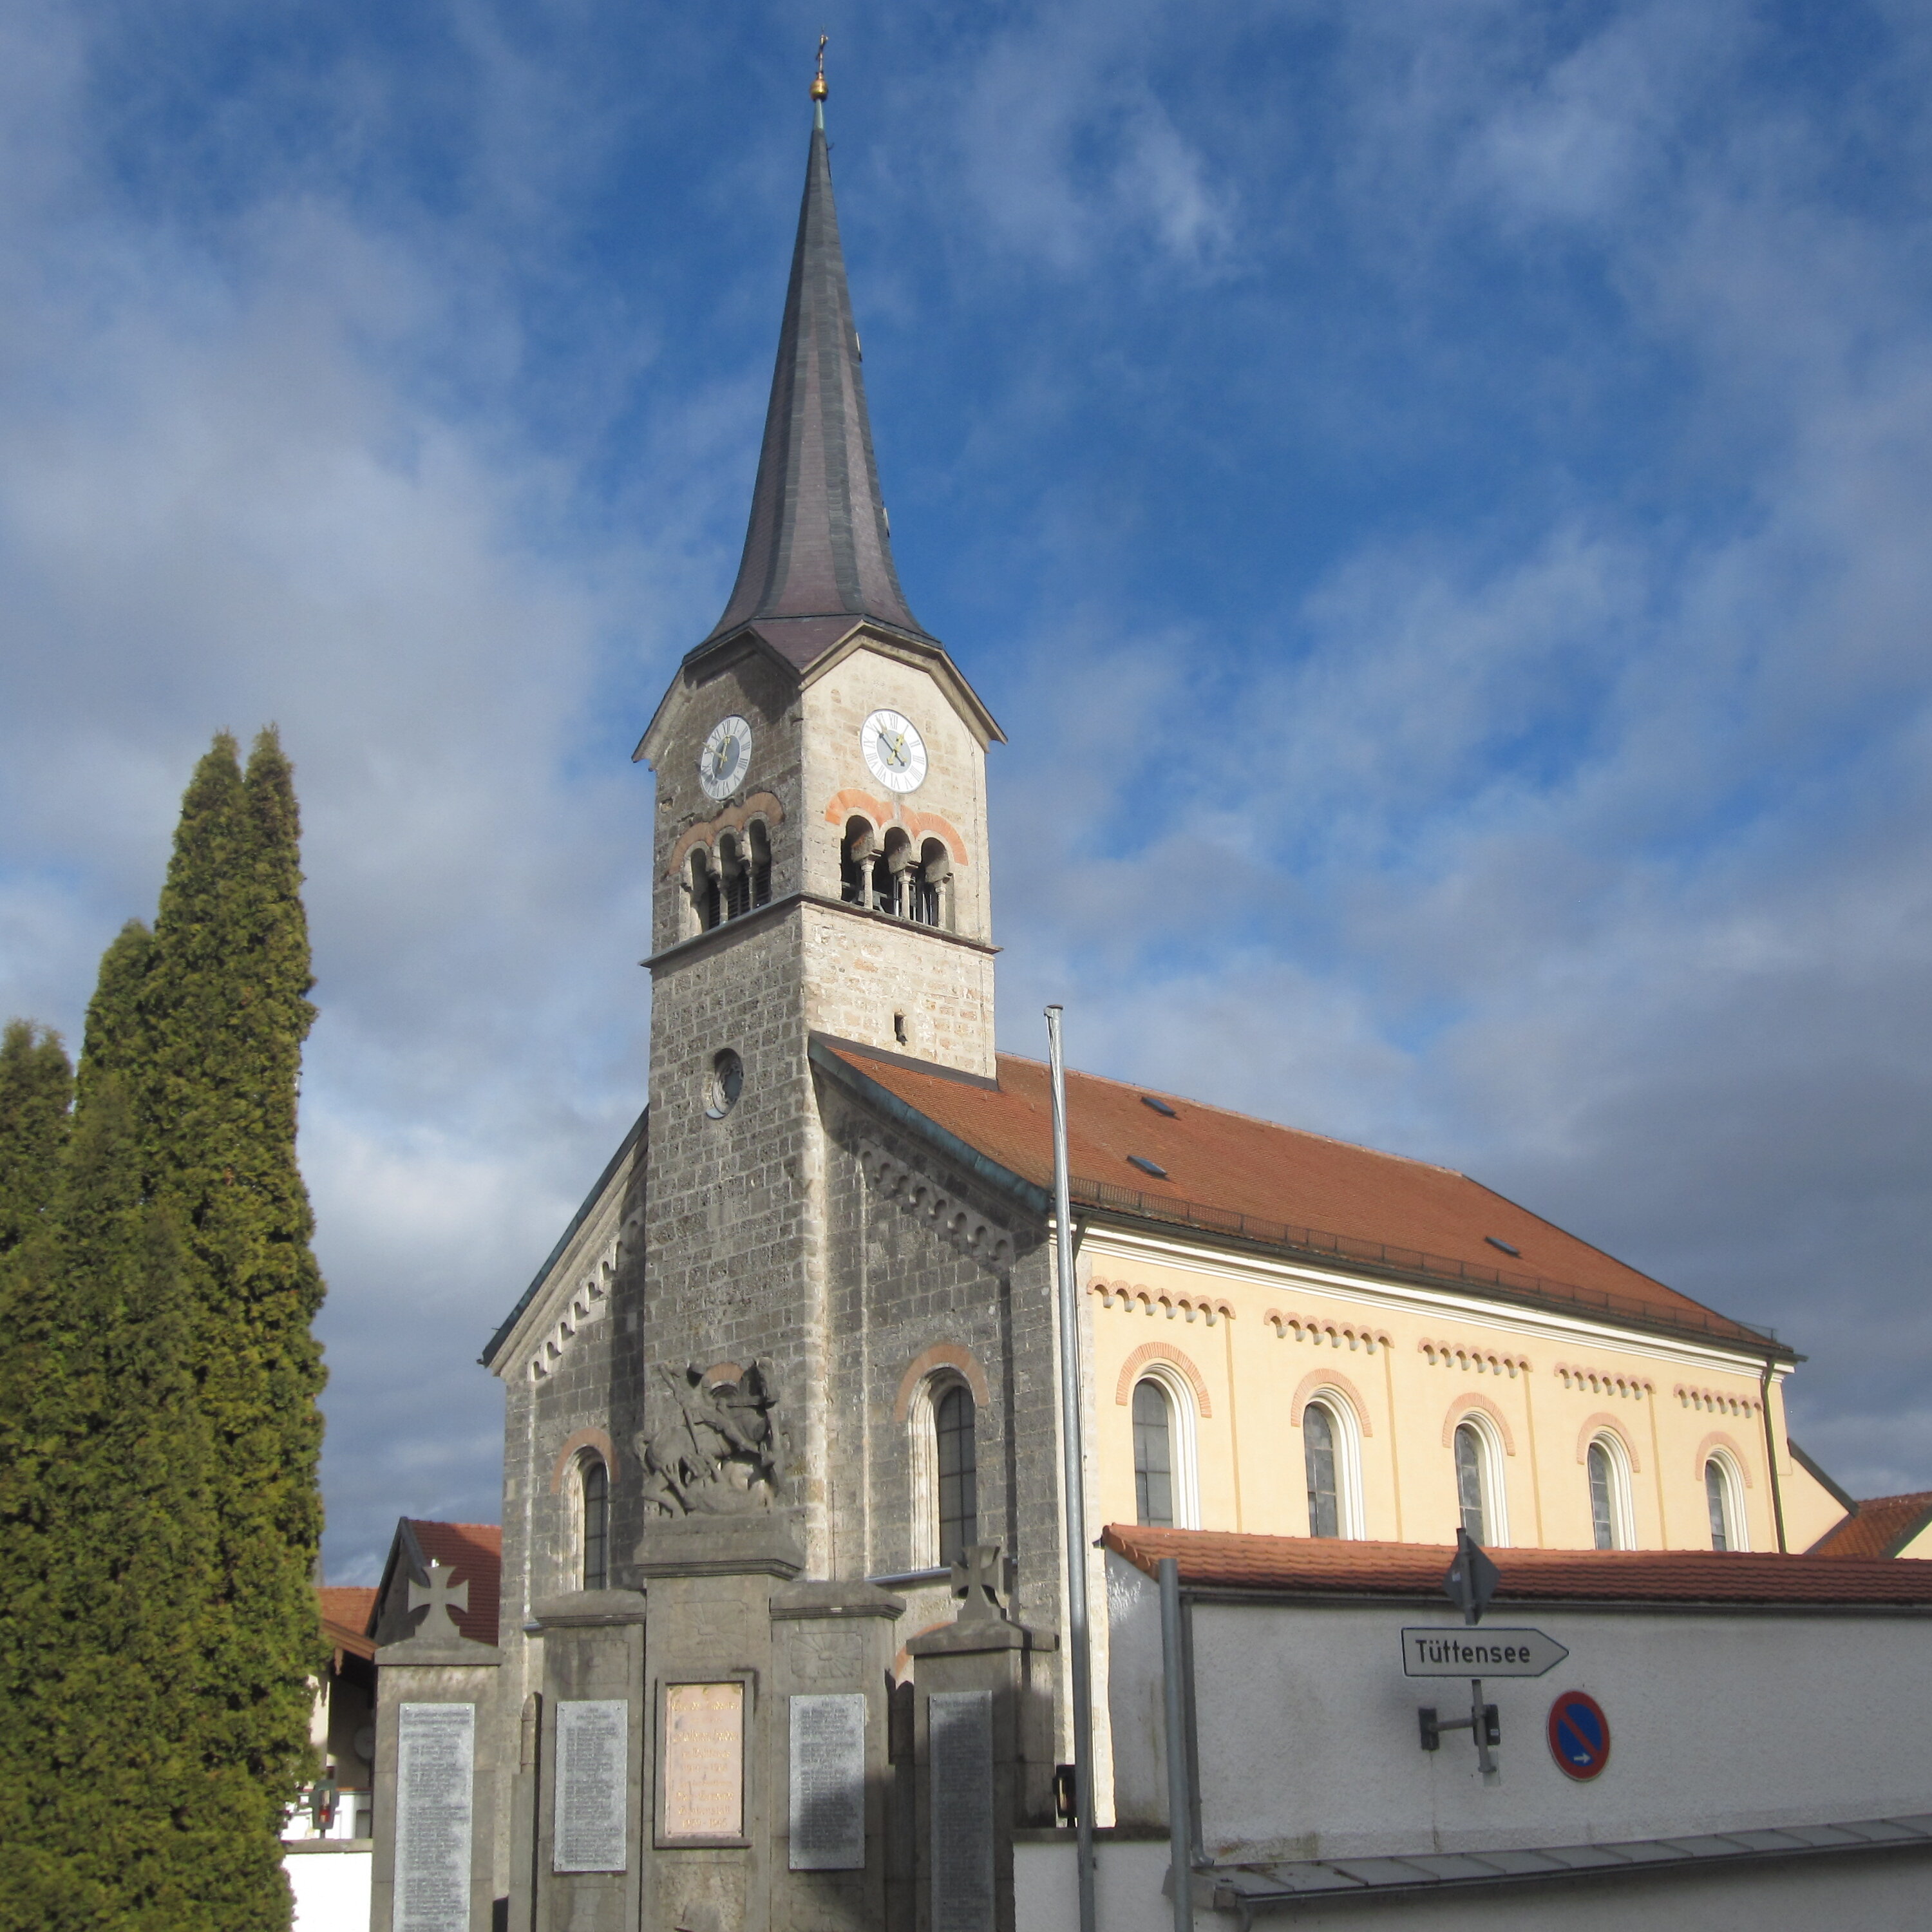 Pfarrei St. Maximilian: Flurumgang am Eichberg